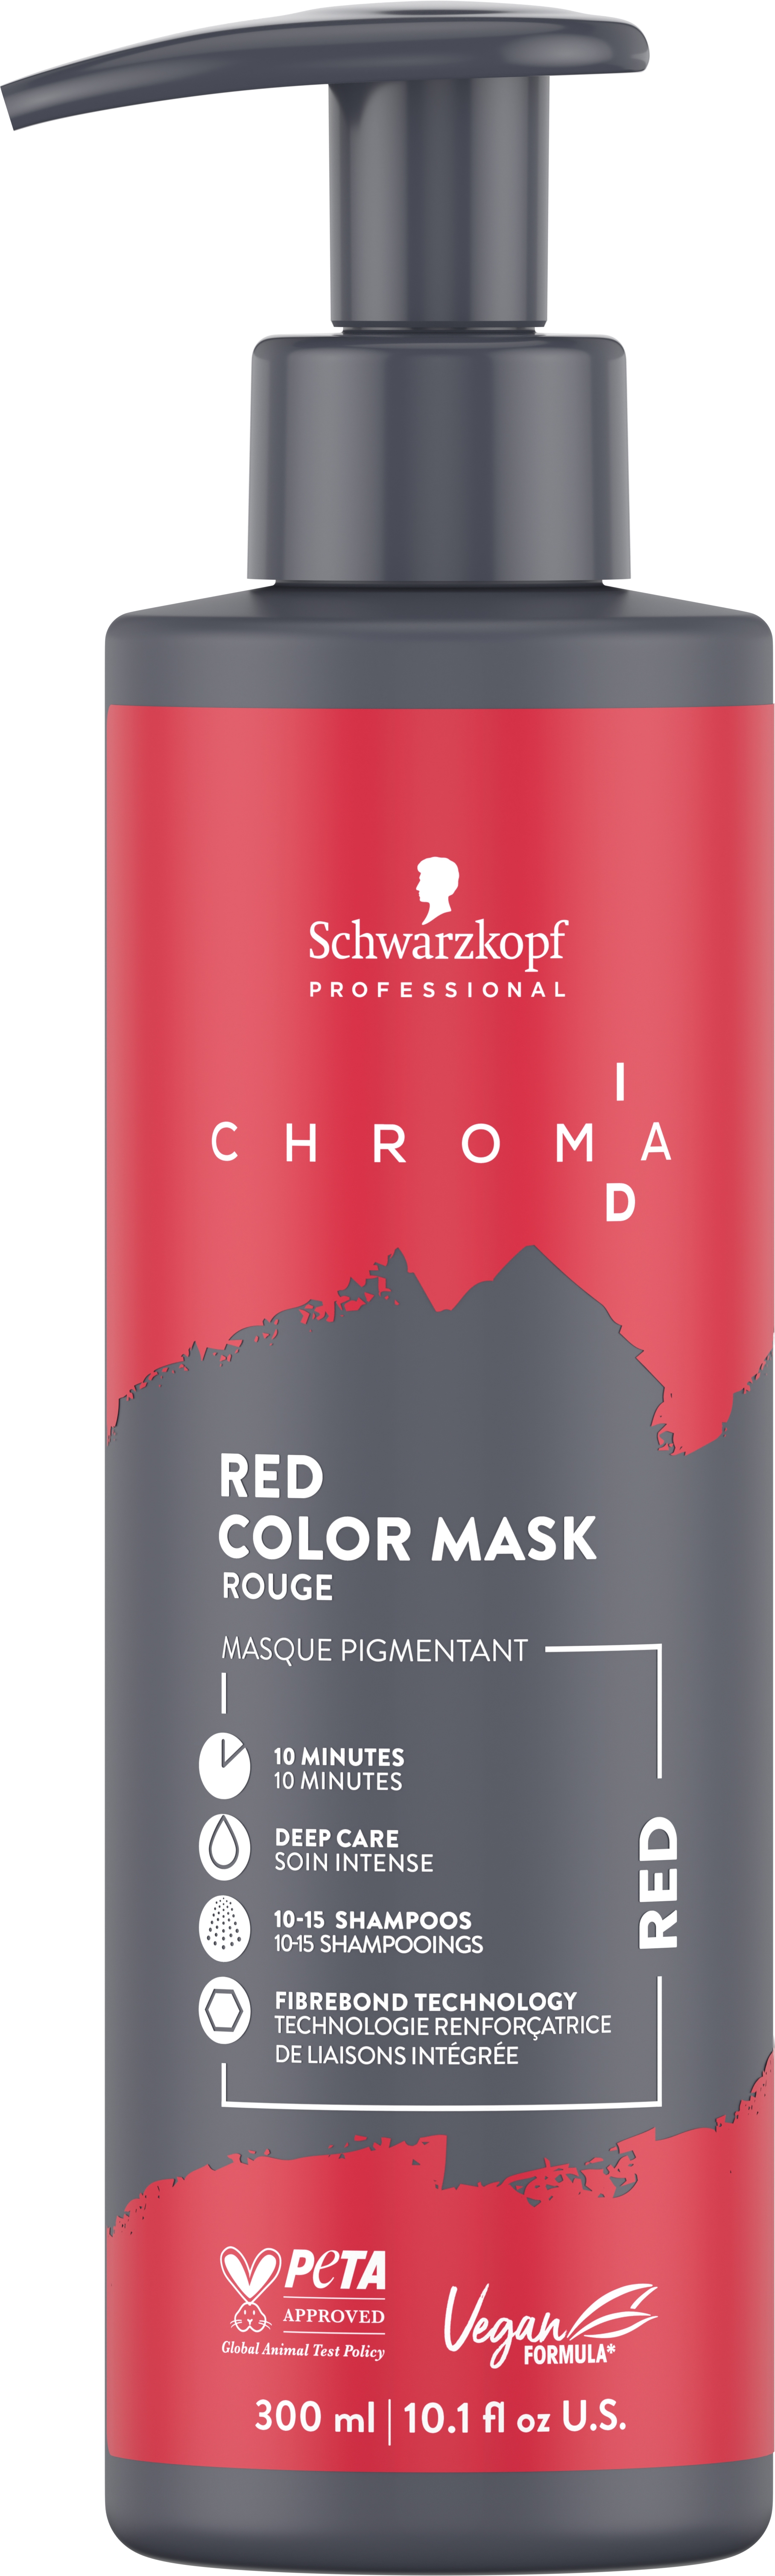 Produktbild von Chroma ID - Bonding Color Mask Red